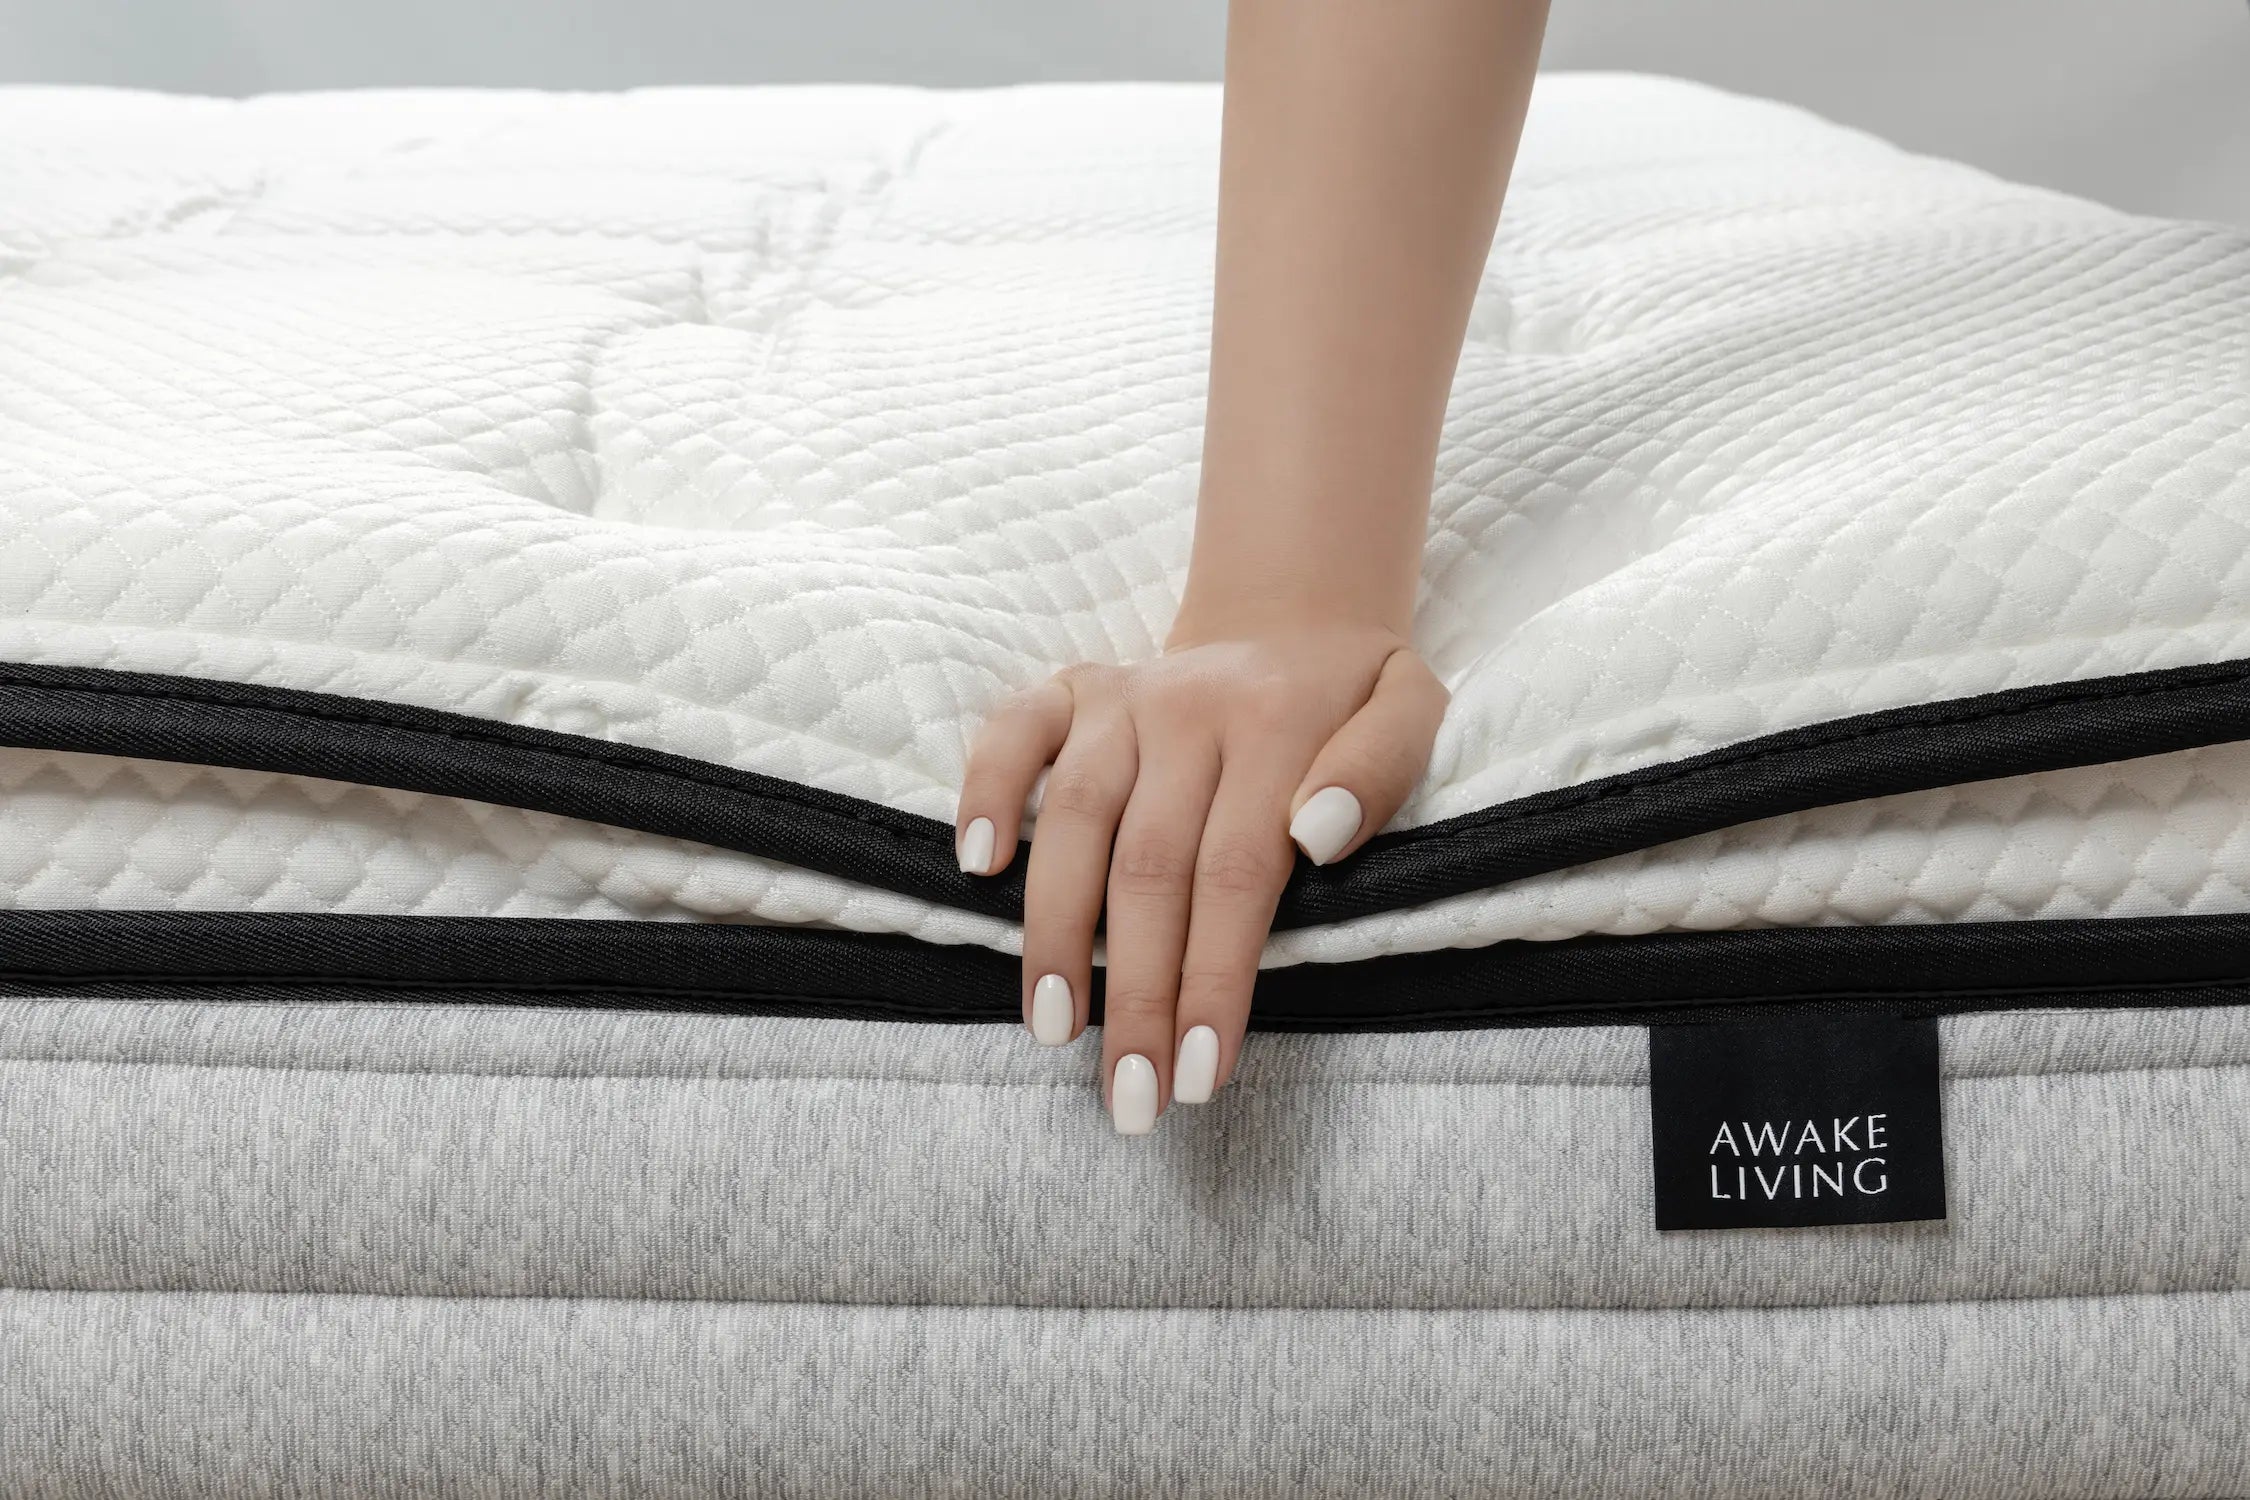  Luxury 3.0 美夢成真頂級三線鋼天絲乳膠獨立筒床墊情境照 - 2